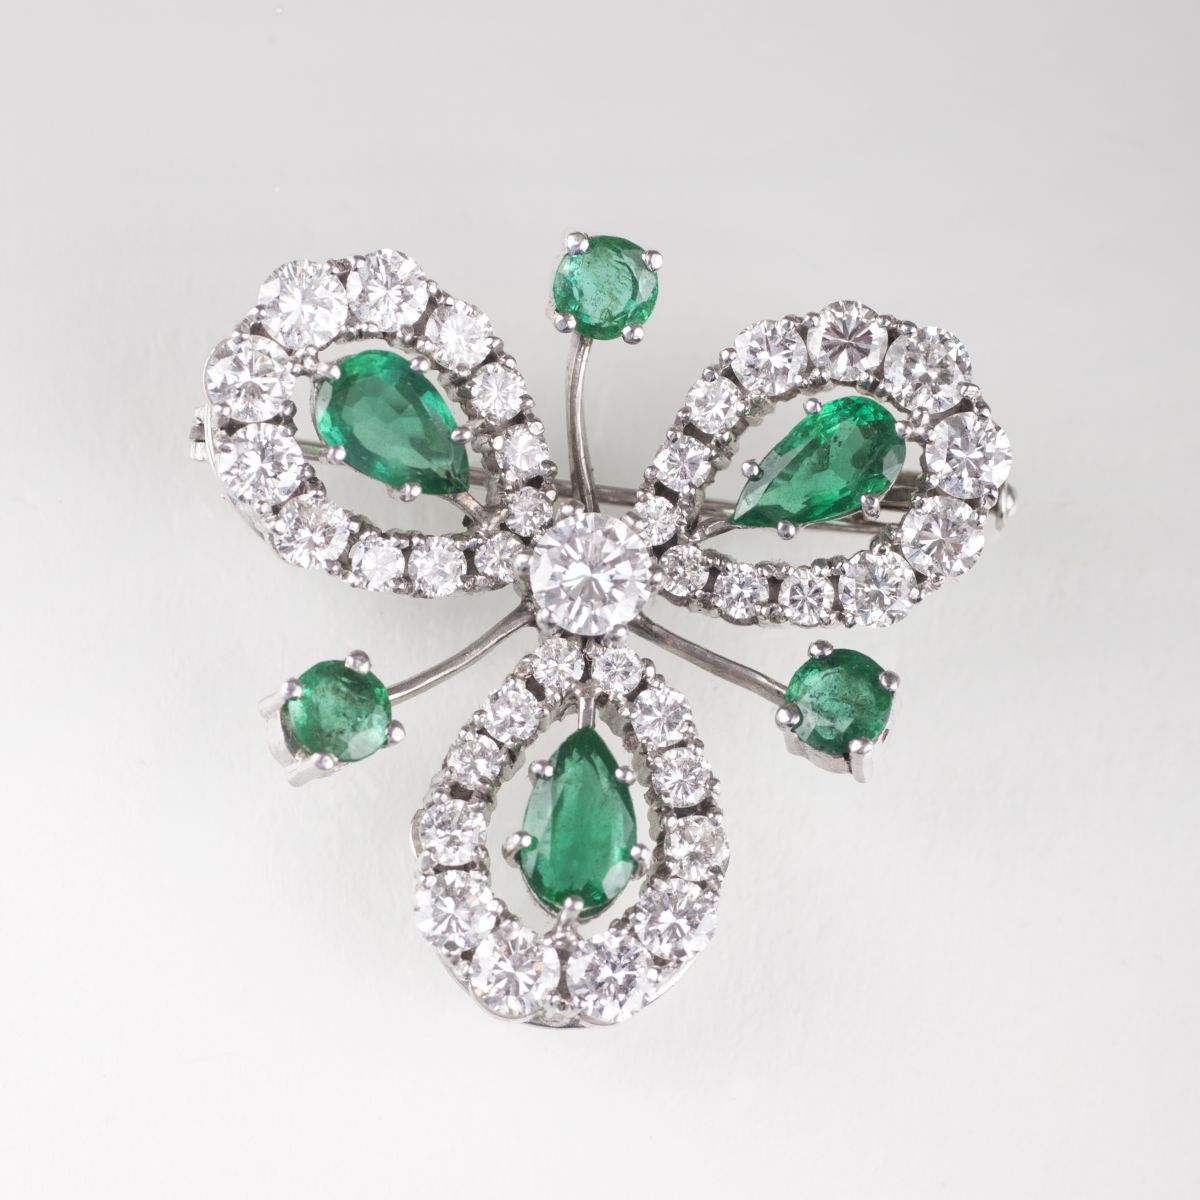 A Vintage emerald diamond brooch